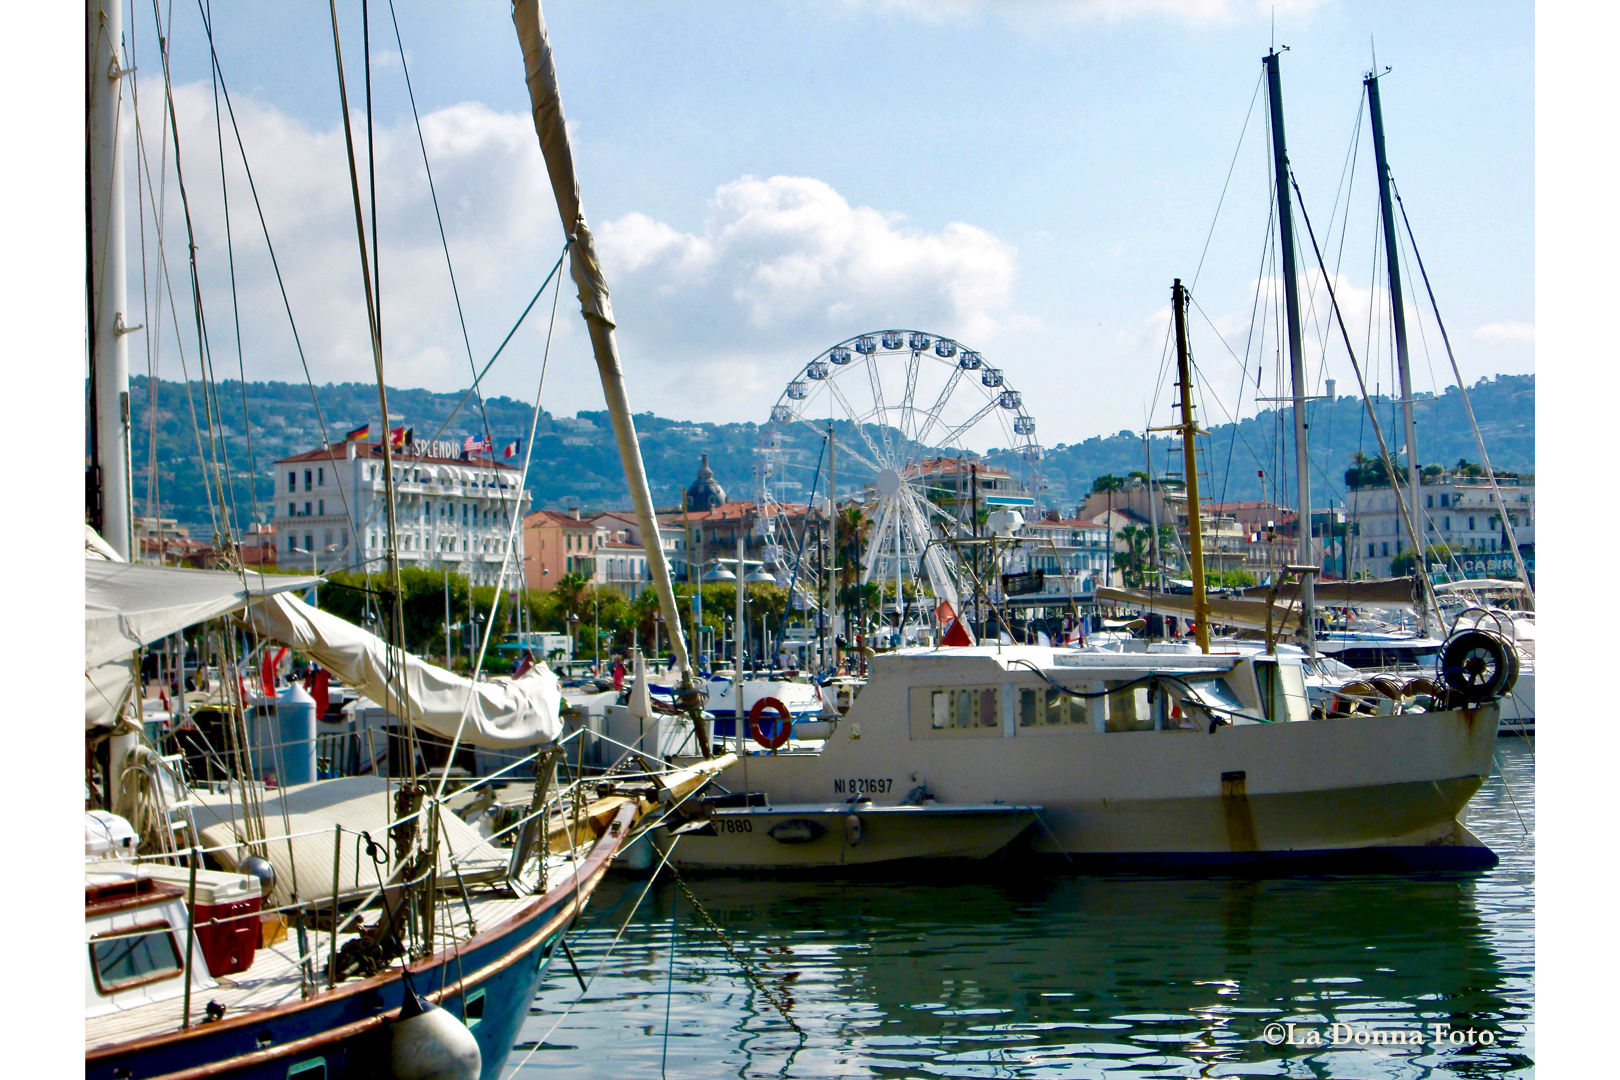 Harborside at Cannes-France :: Italian Landscape Photography - La Donna Foto Houston, TX 77007